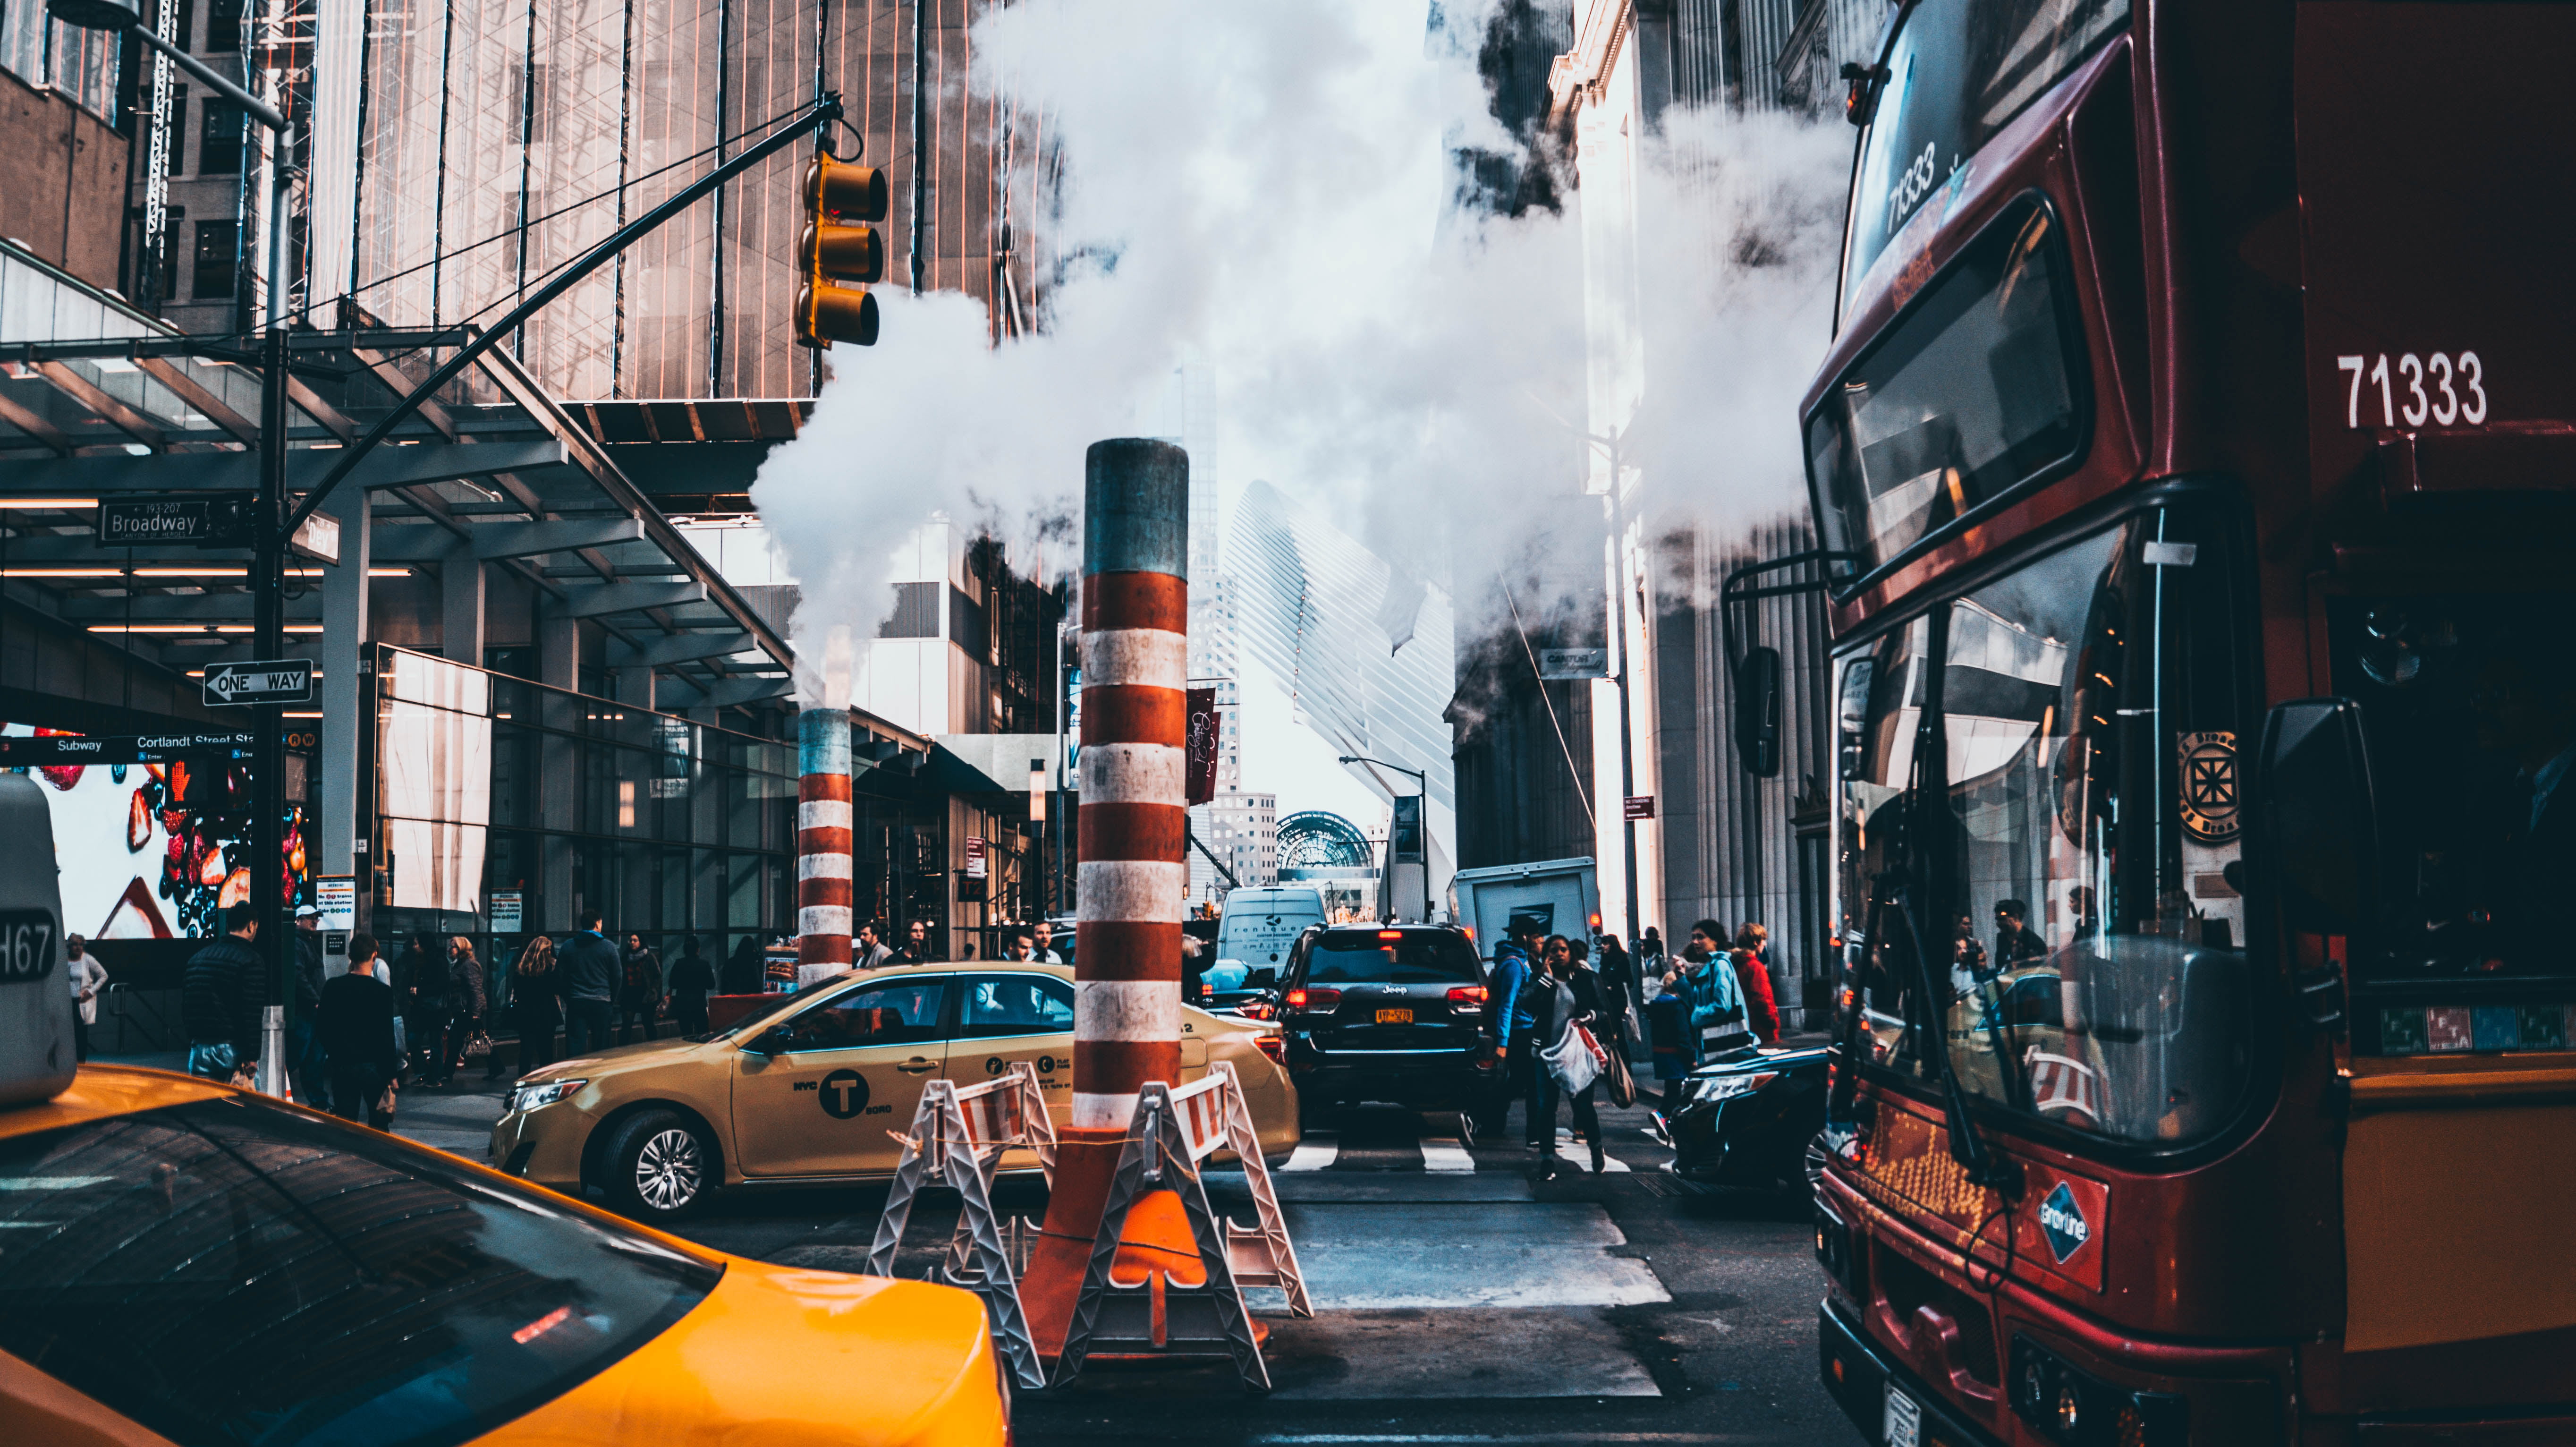 yellow car, New York City, buses, New York Taxi, smoke, traffic lights